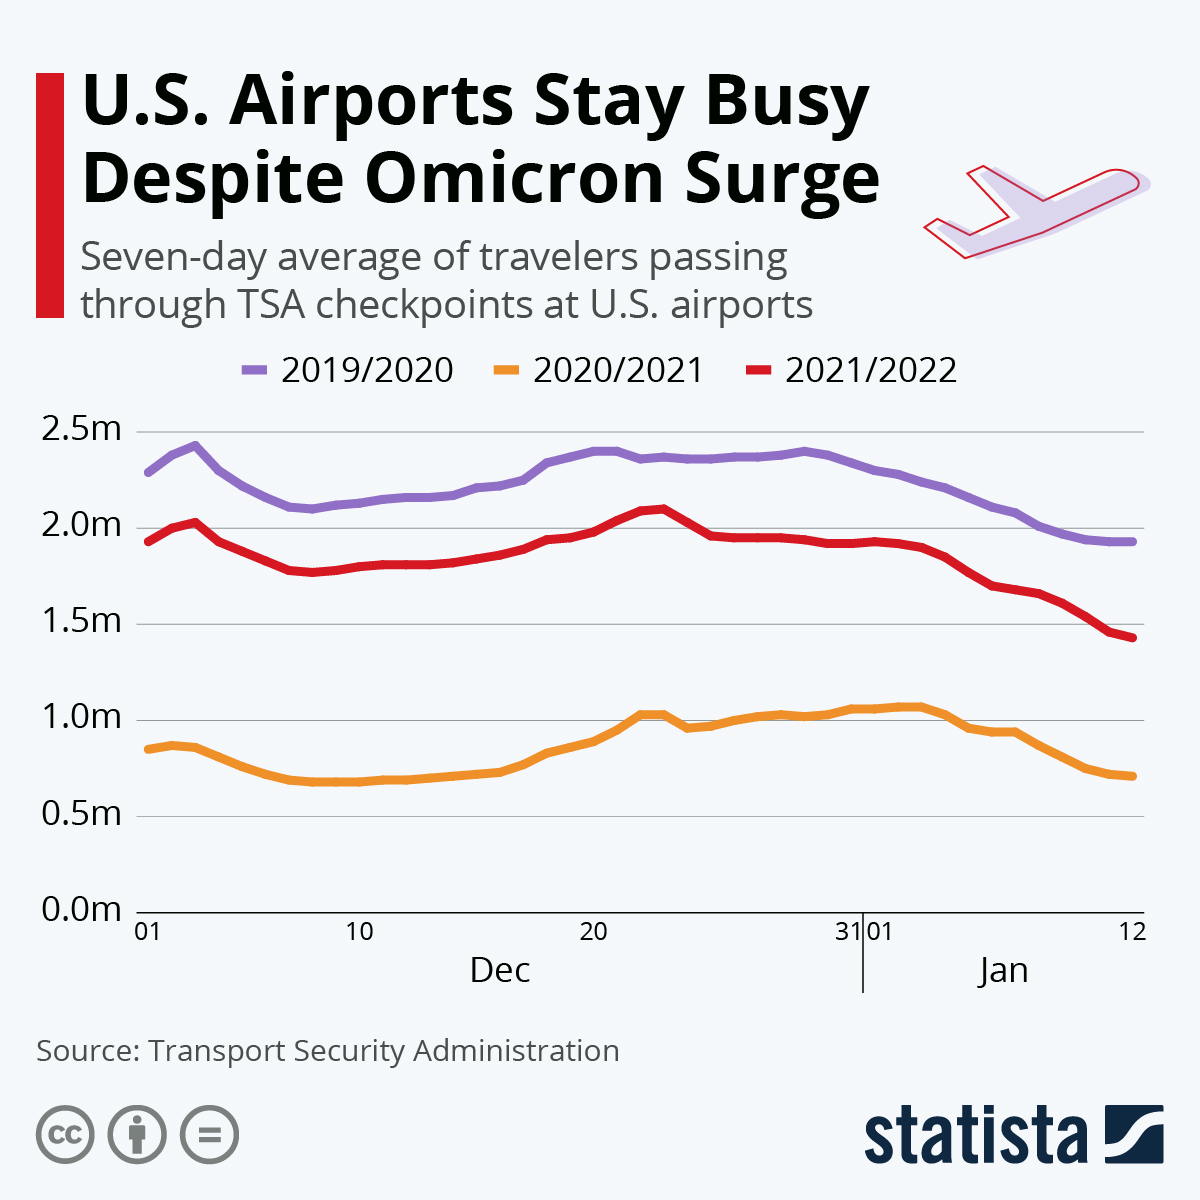 U.S. Airports Stay Busy Despite Omicron Surge